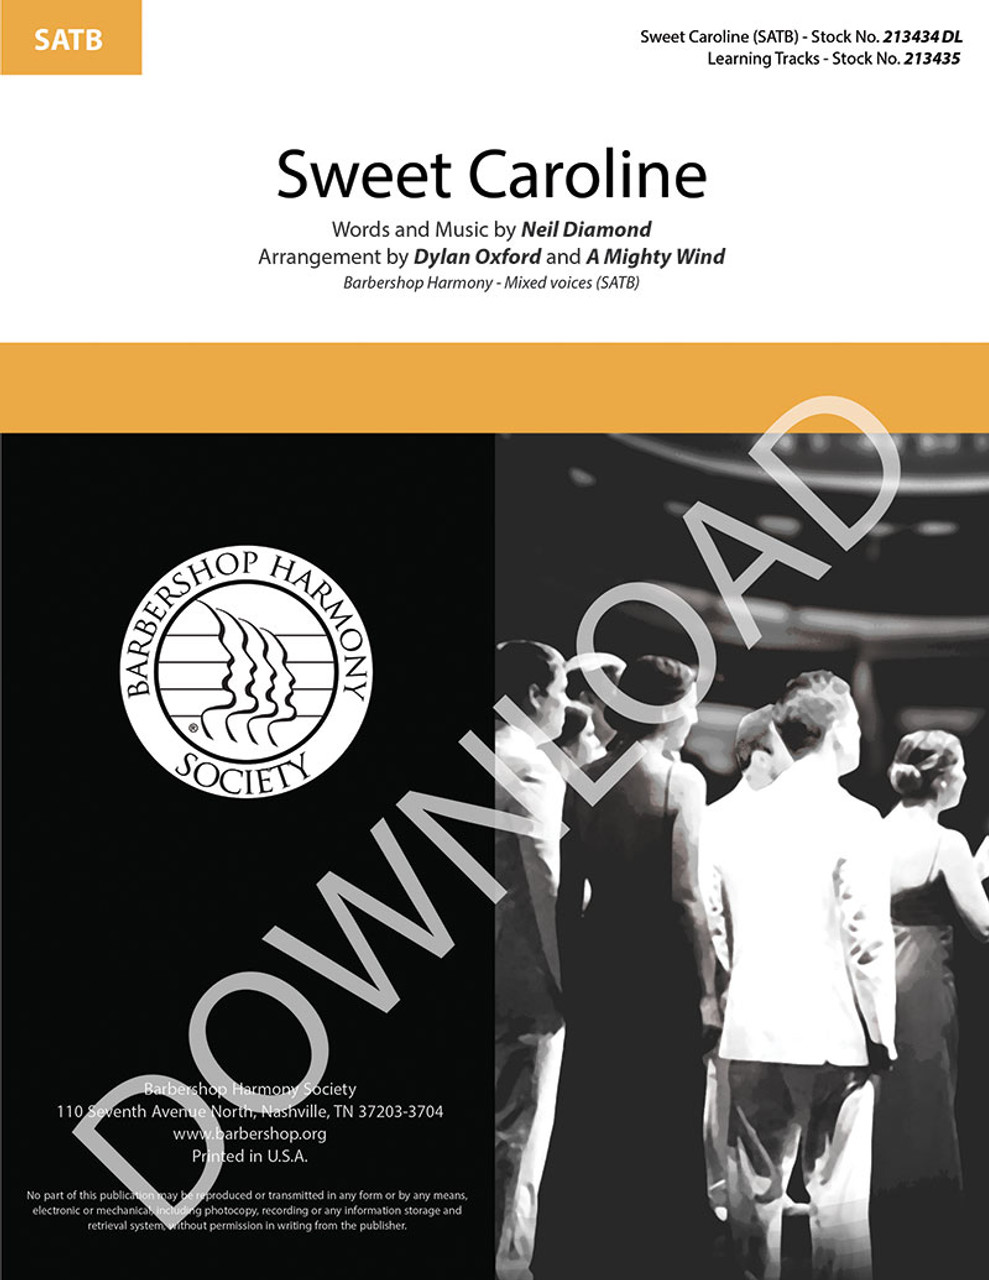 Sweet Caroline (SATB) (arr. Oxford & A Mighty Wind) - Download